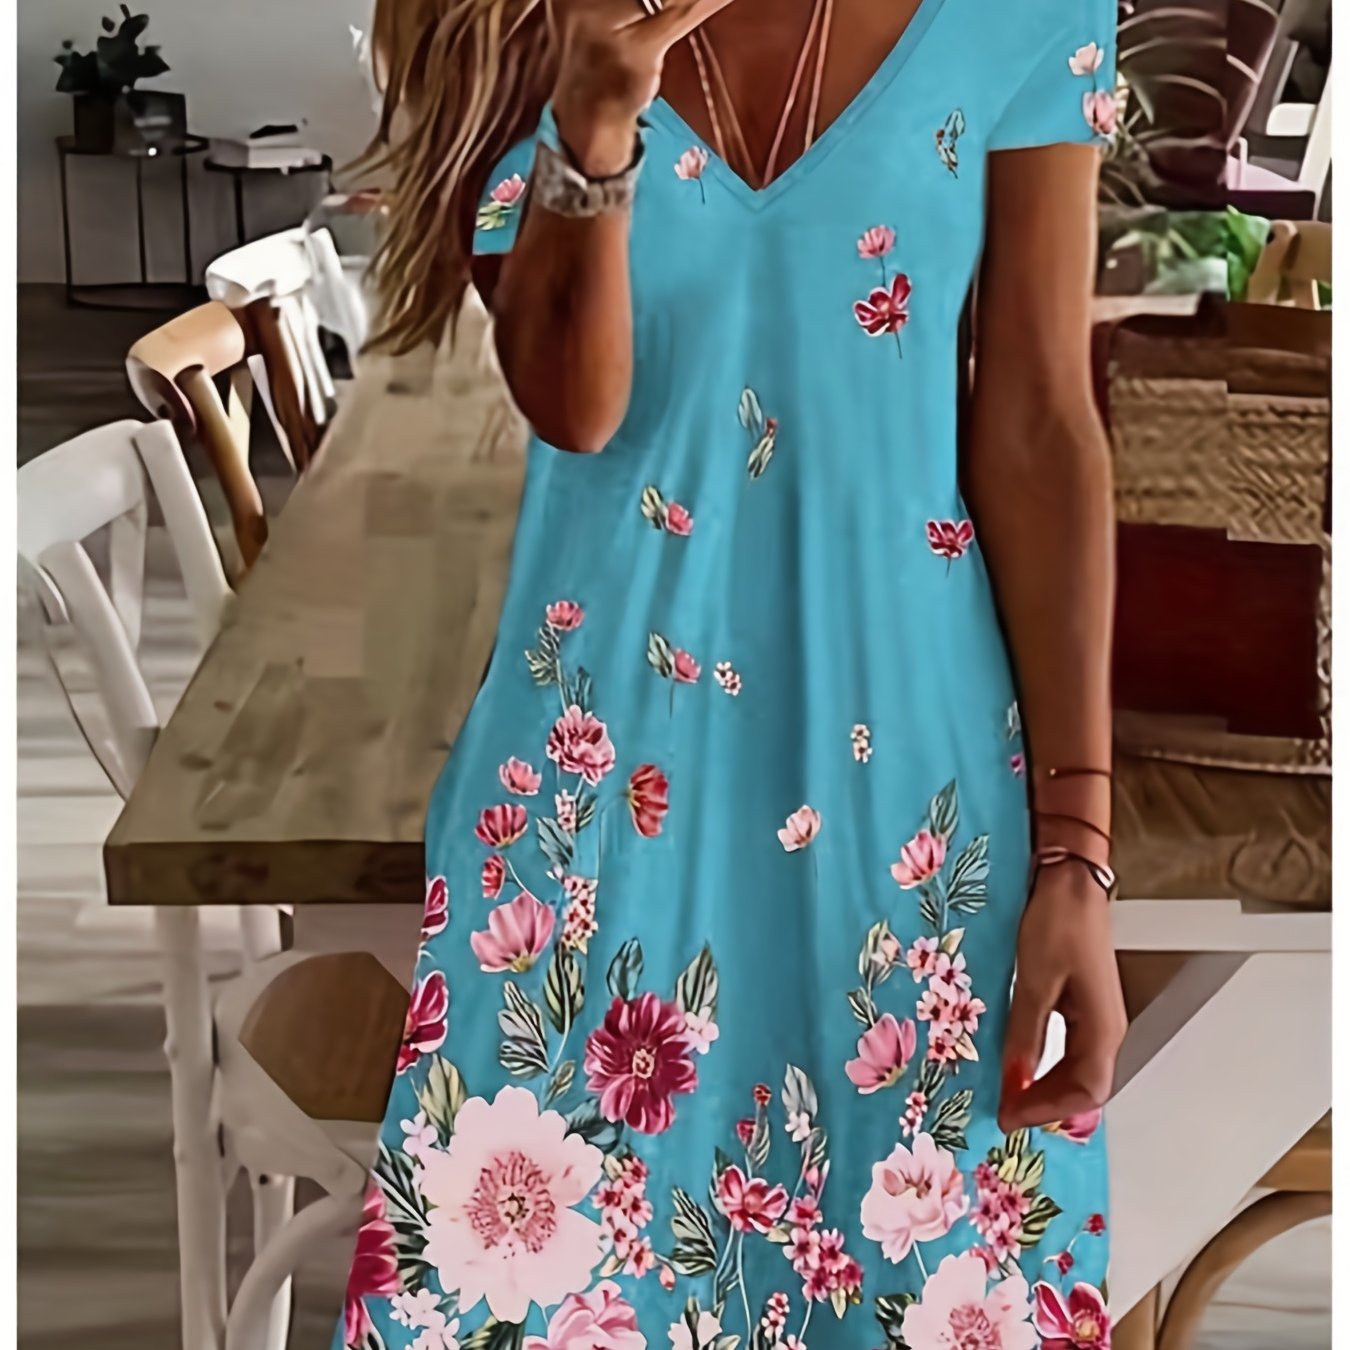 「lovevop」Floral Print Short Sleeve Dress, V Neck Casual Dress For Summer & Spring, Women's Clothing